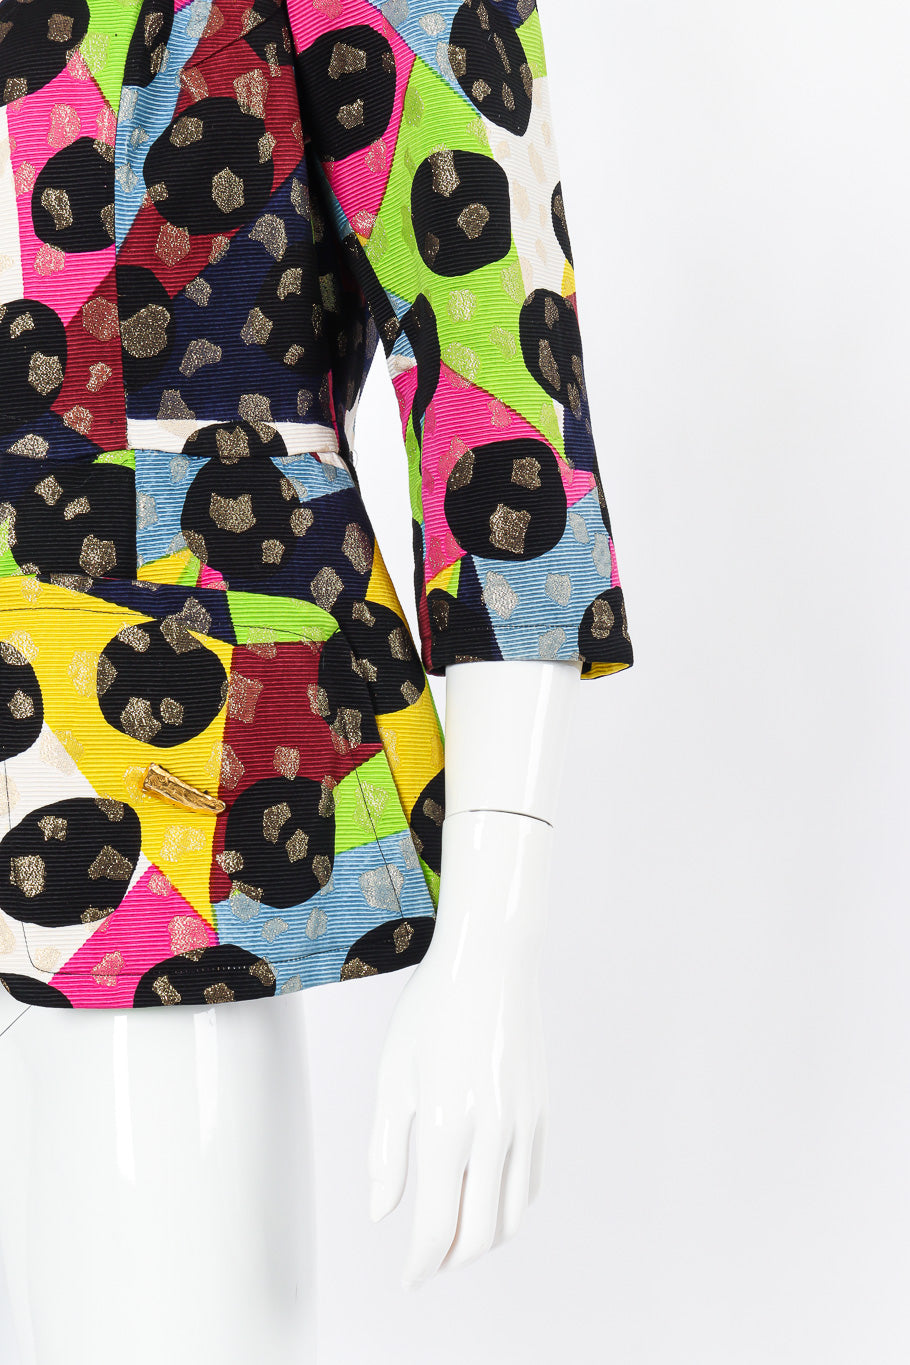 Peplum jacket by Christian LaCroix on mannequin sleeve close @recessla